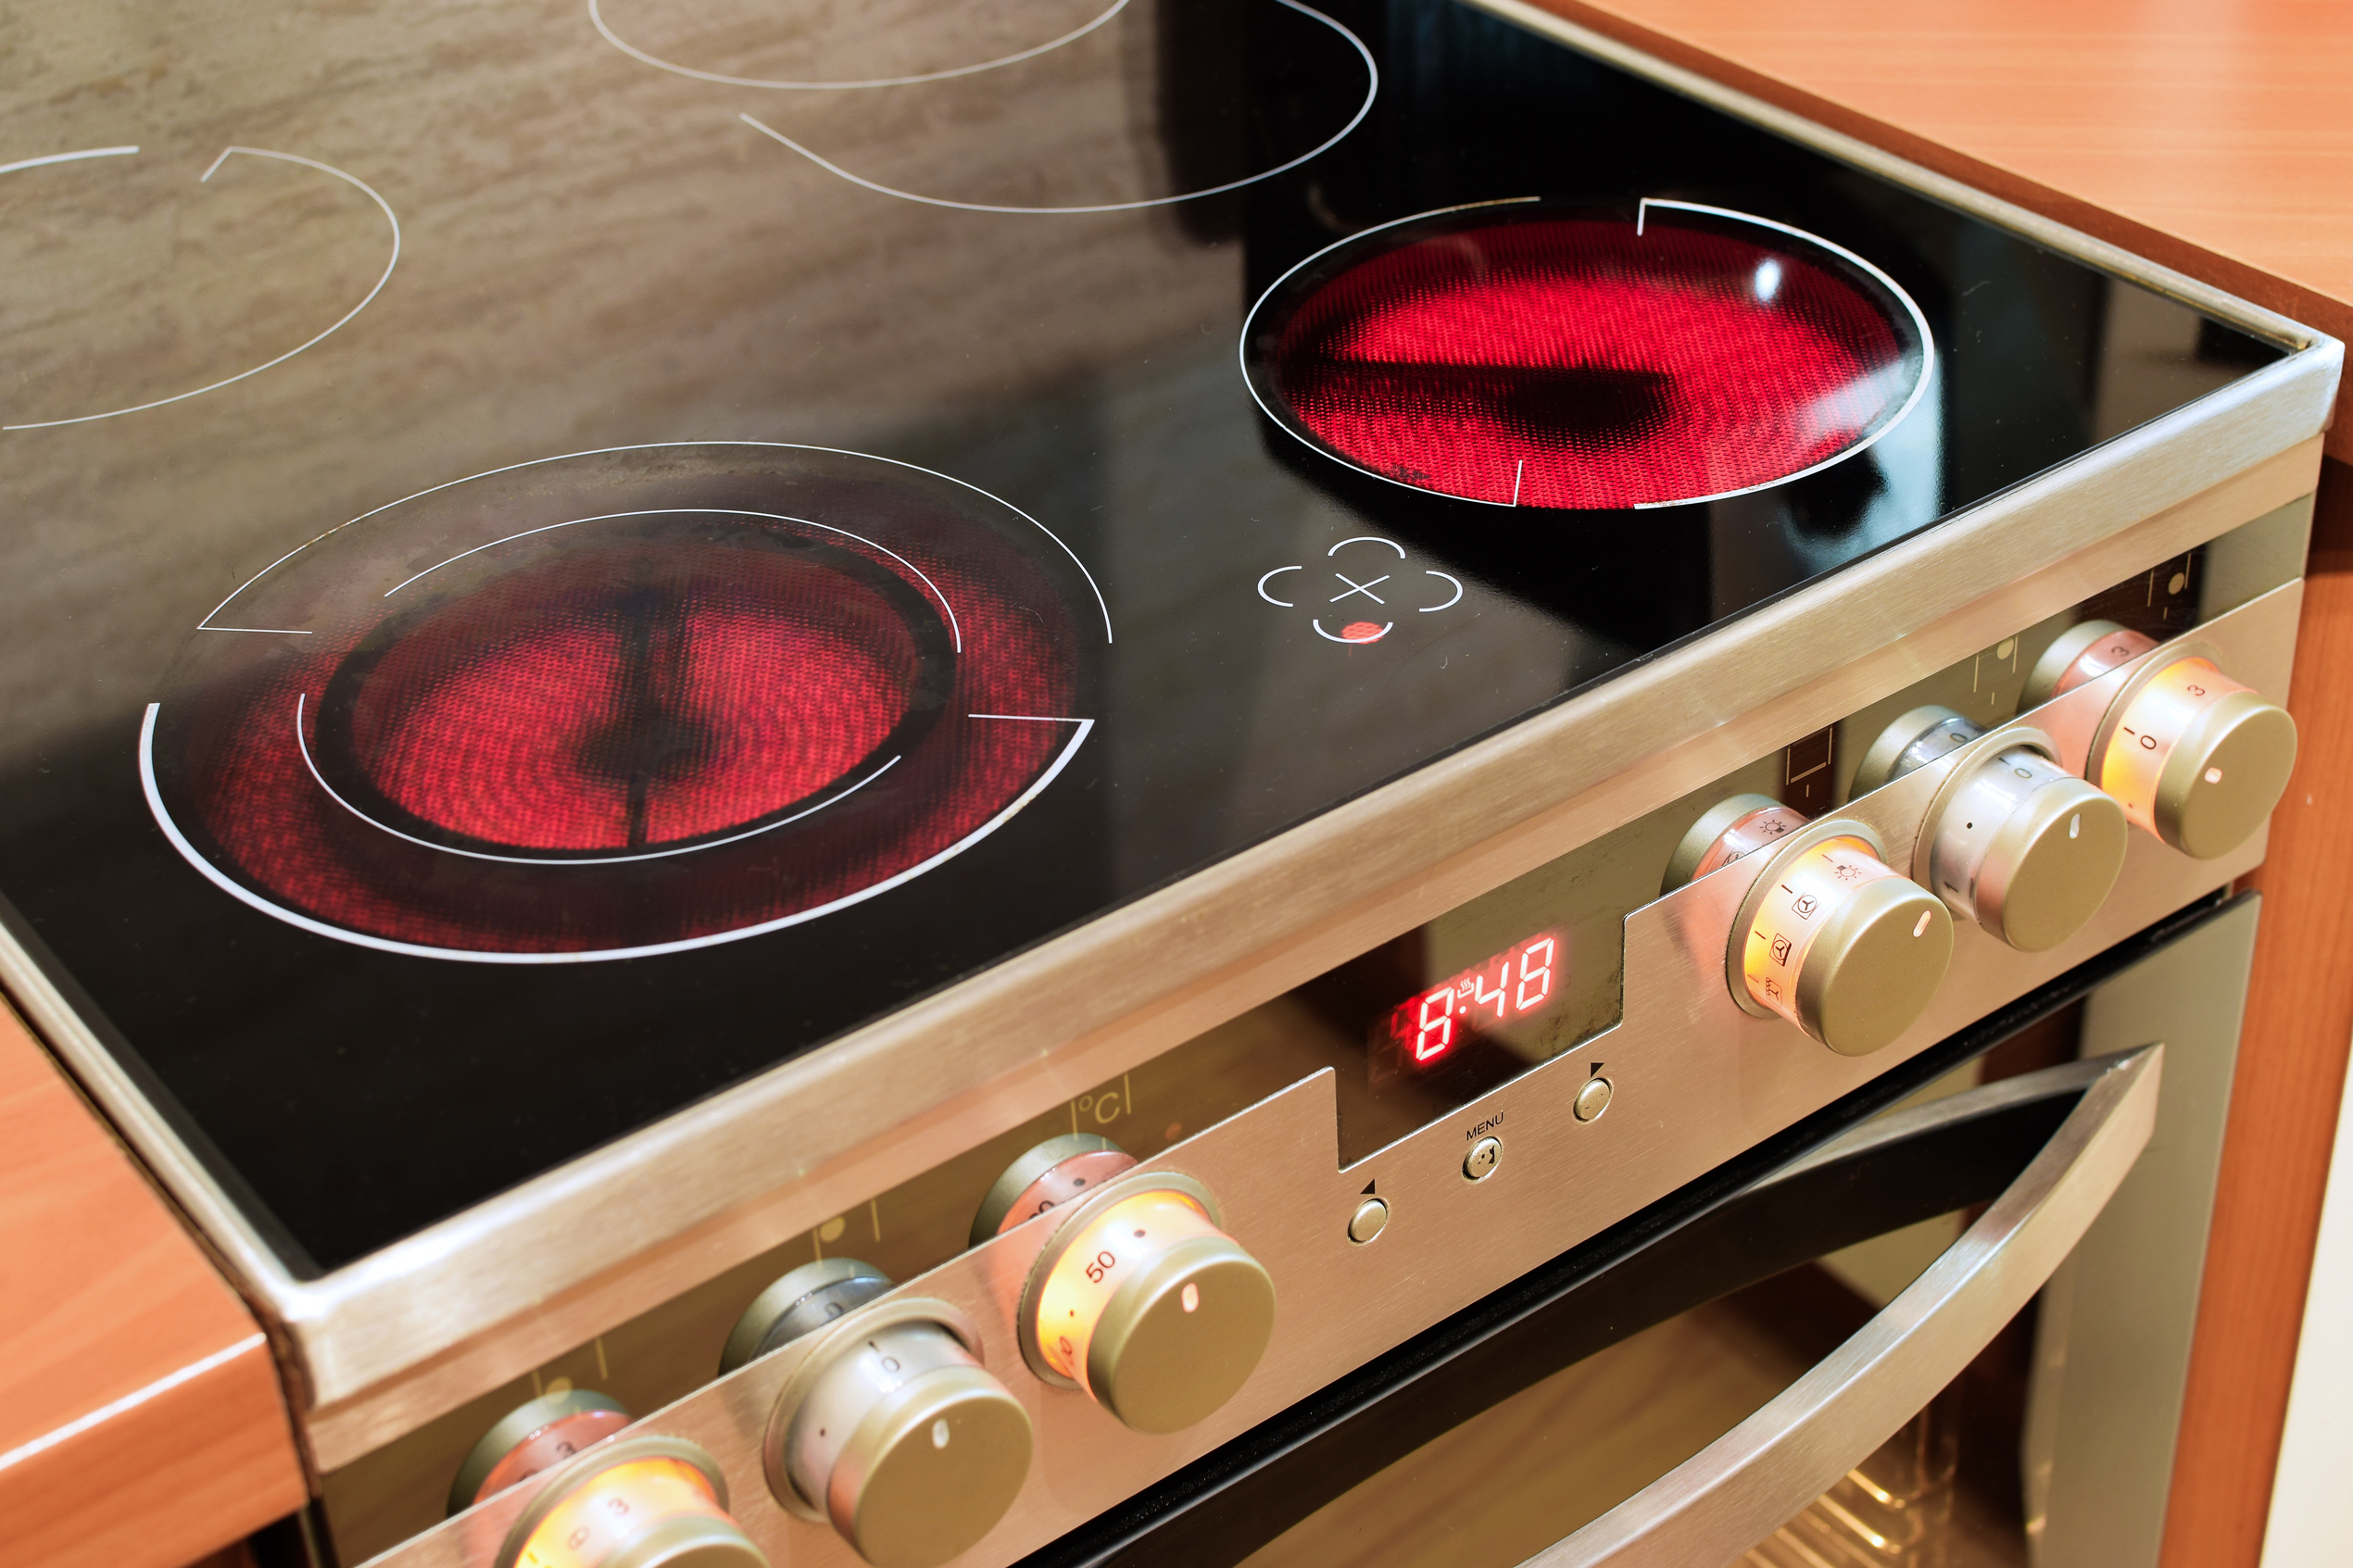 Predicting the Future of Kitchen Appliances